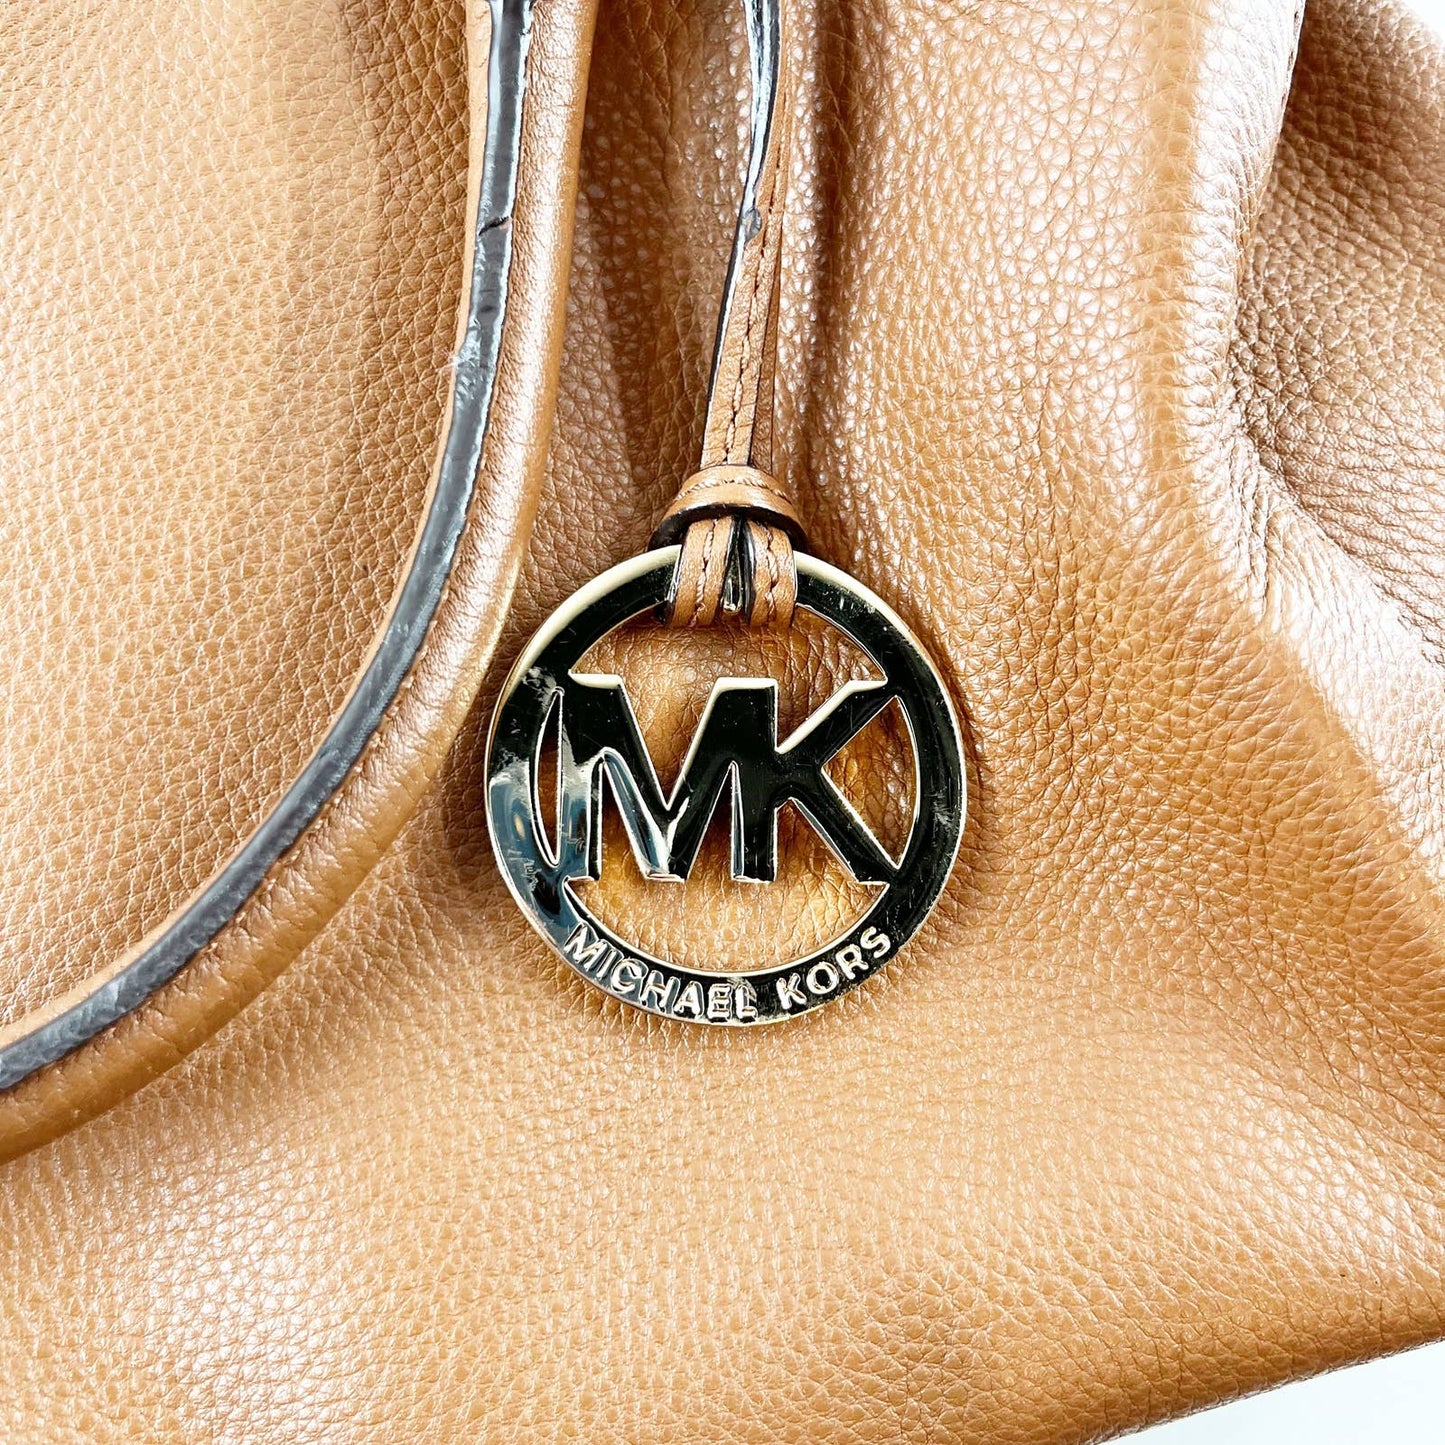 Michael Kors Kellen Saffiano Pebbled Leather Tote Handbag Purse Brown Gold